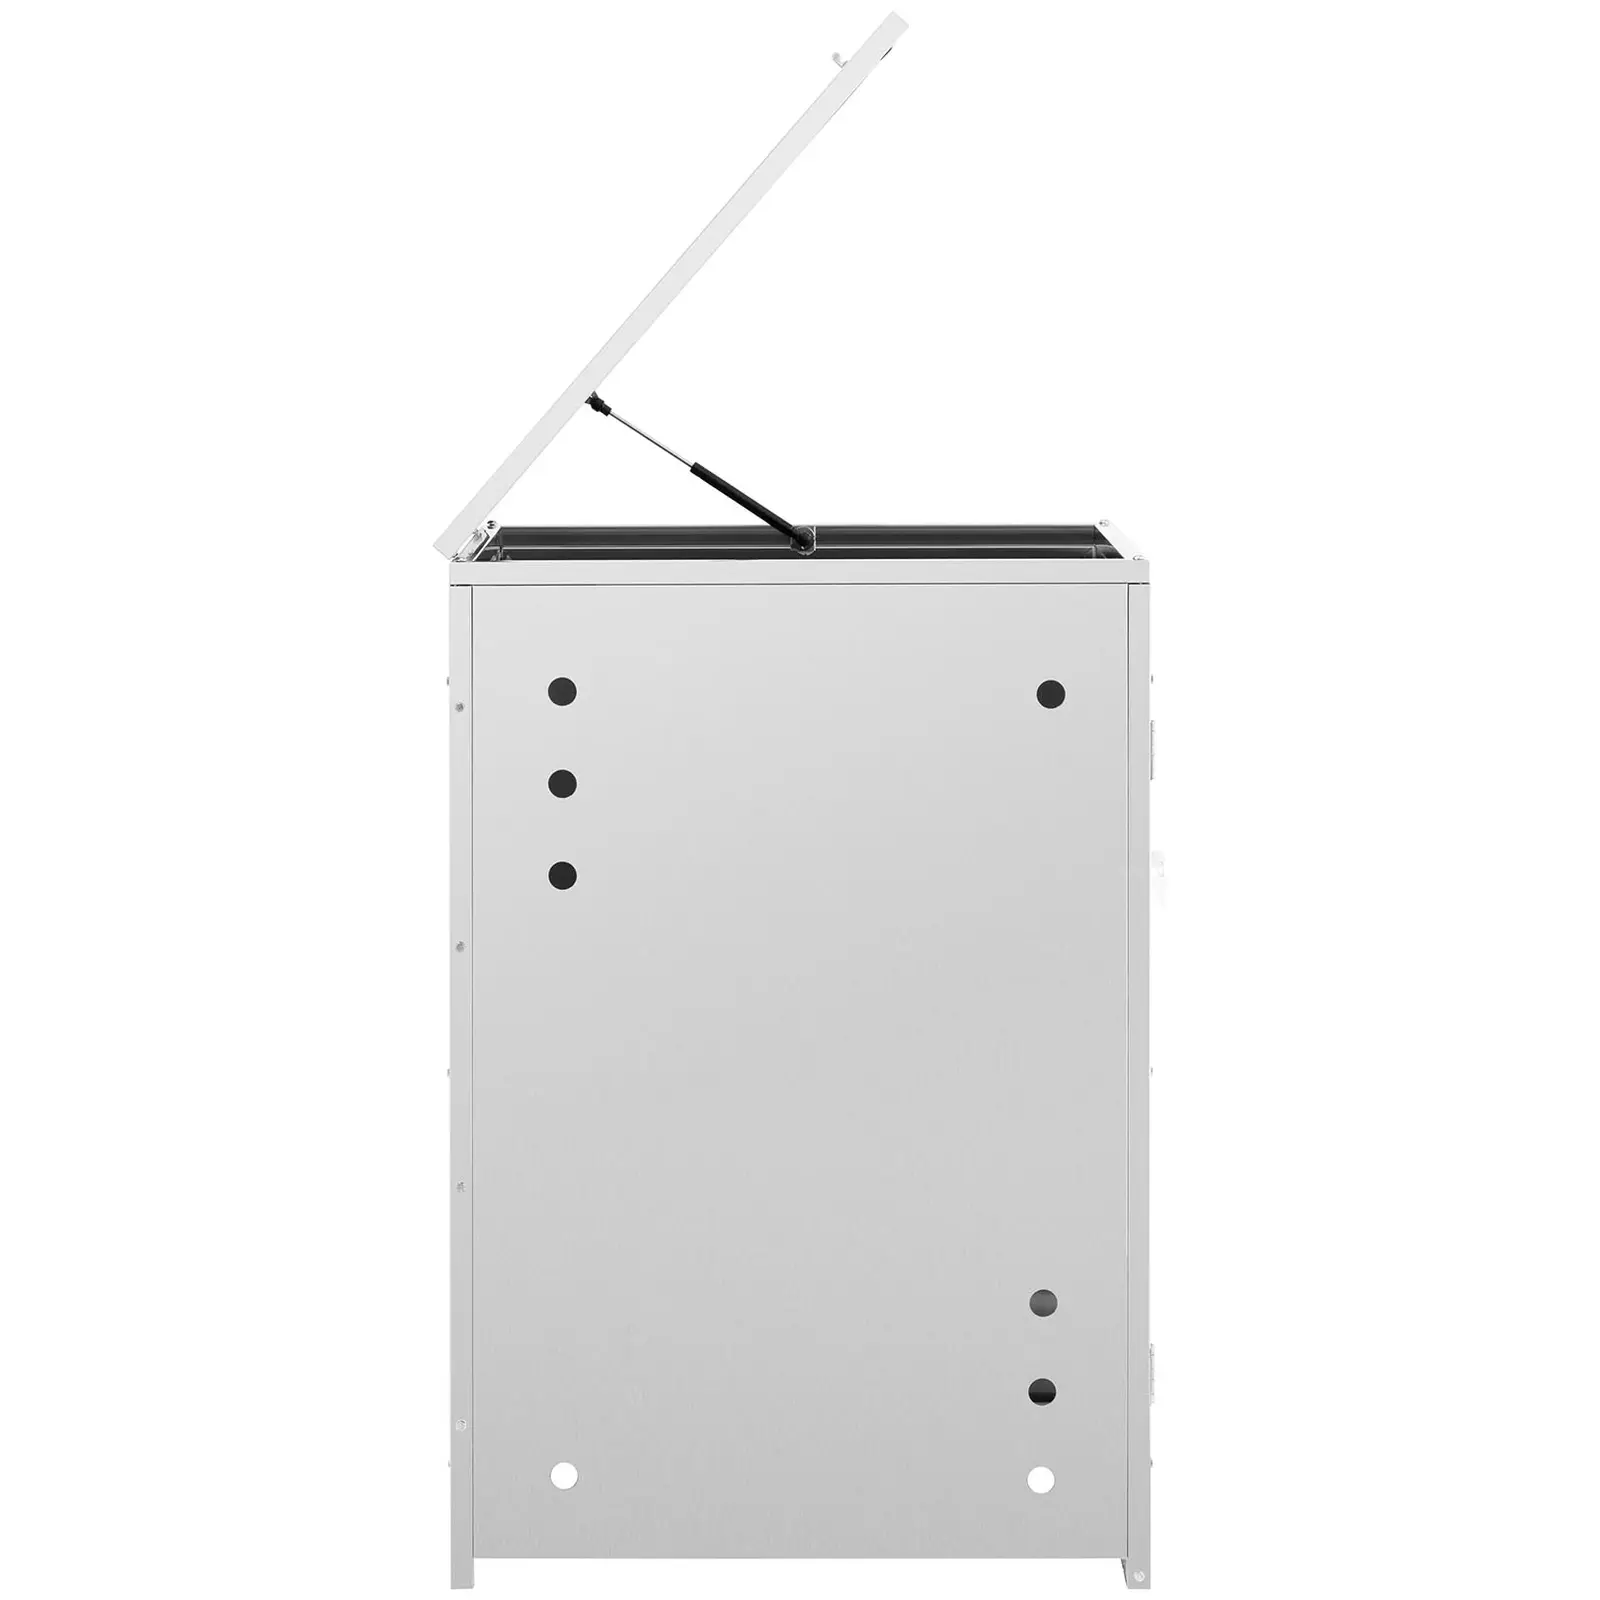 Bin Storage Box -  240 L - horizontal air vents